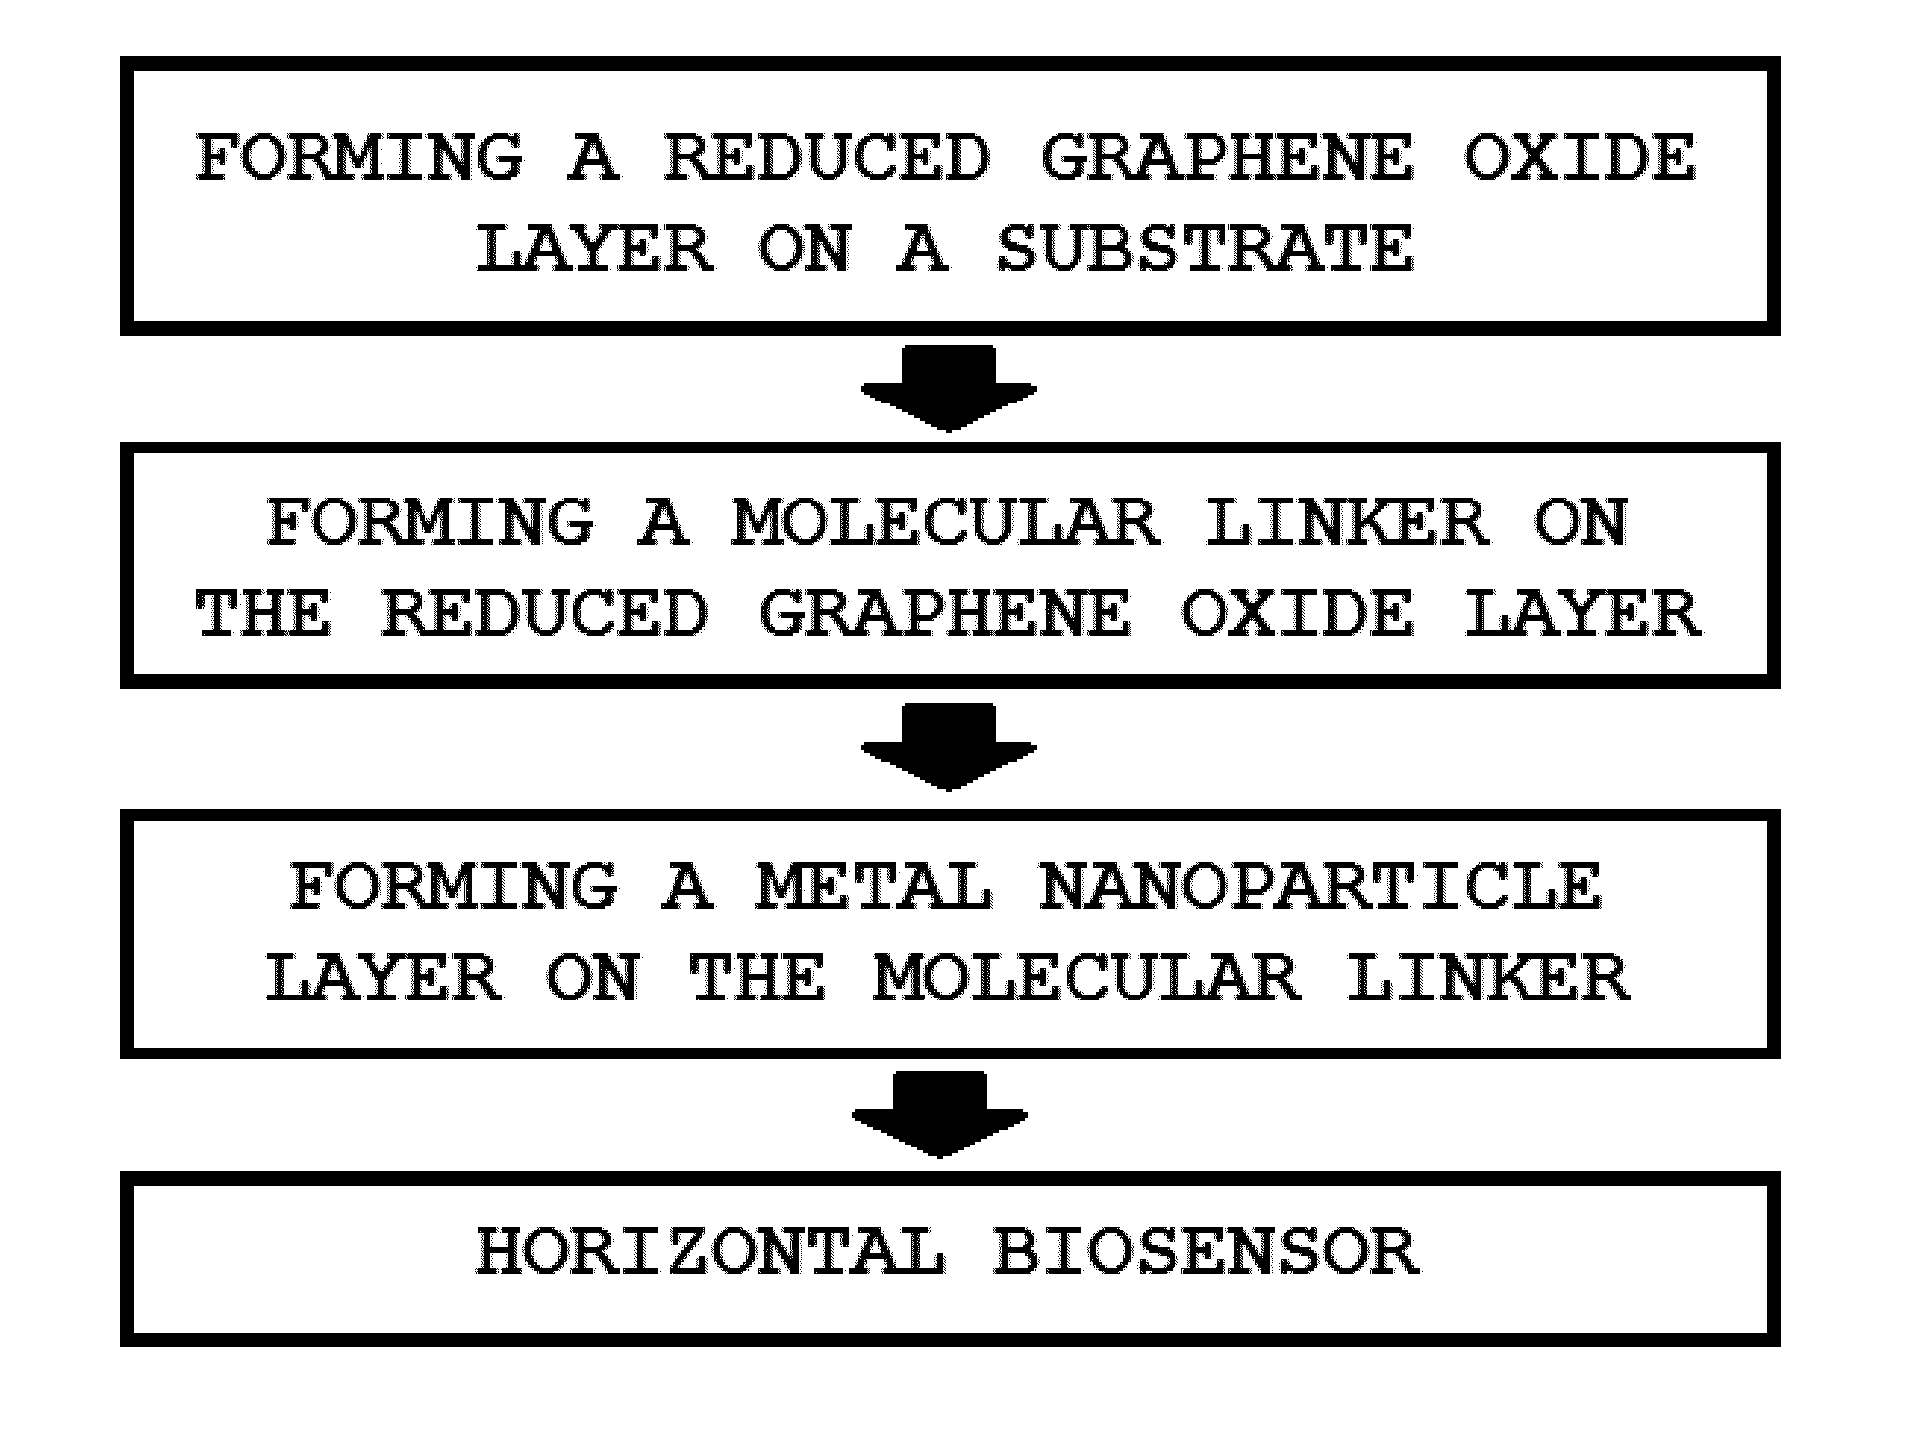 Biosensor comprising reduced graphene oxide layer